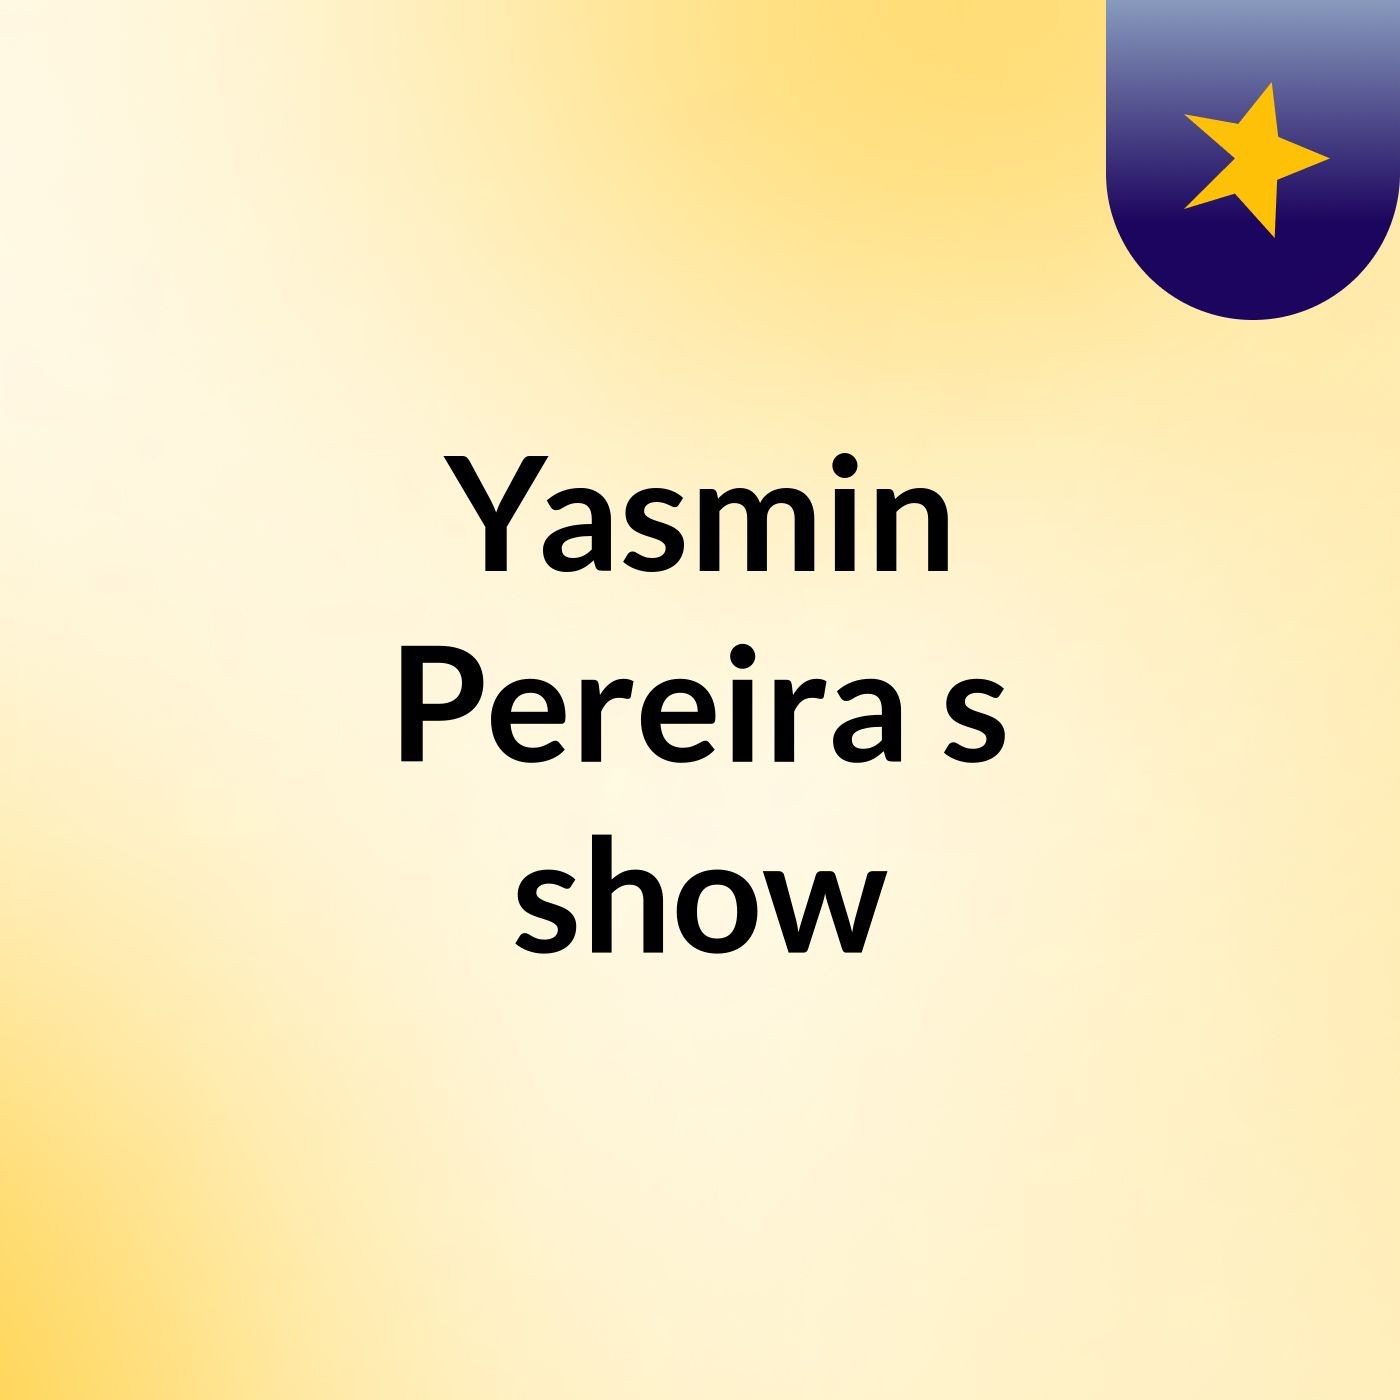 Yasmin Pereira's show